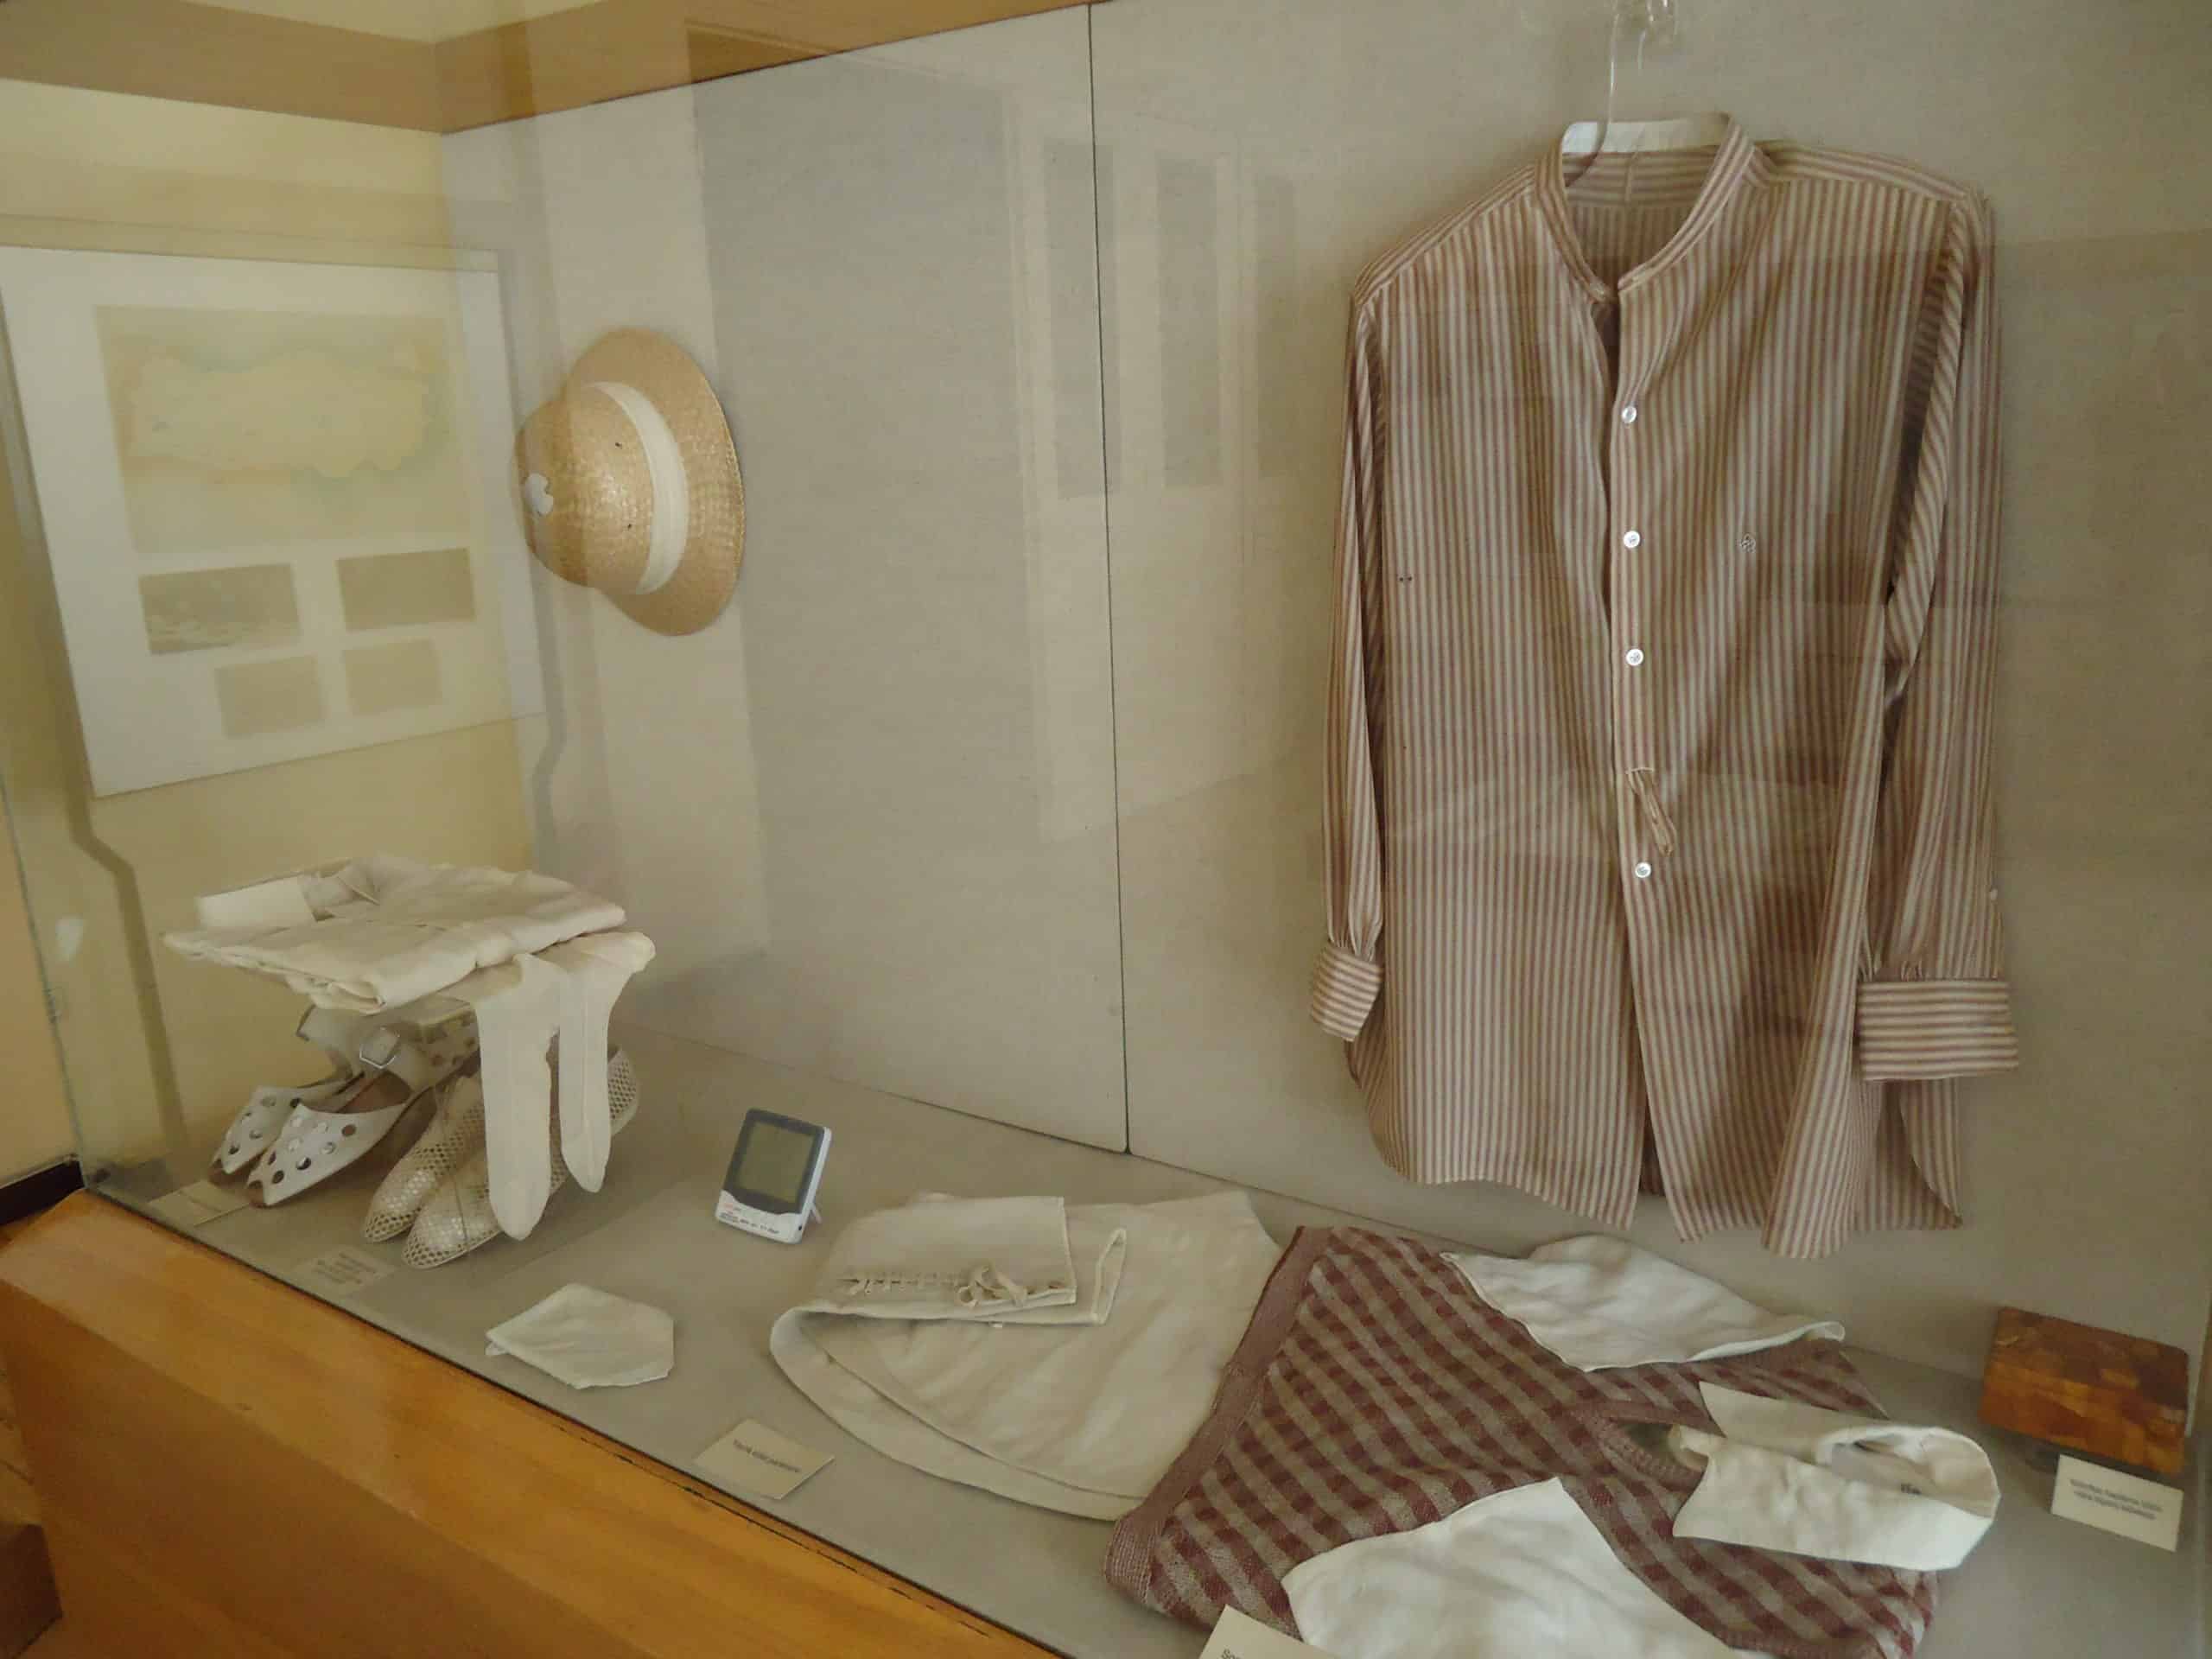 Clothing worn by Atatürk at the Atatürk Museum in Şişli, Istanbul, Turkey